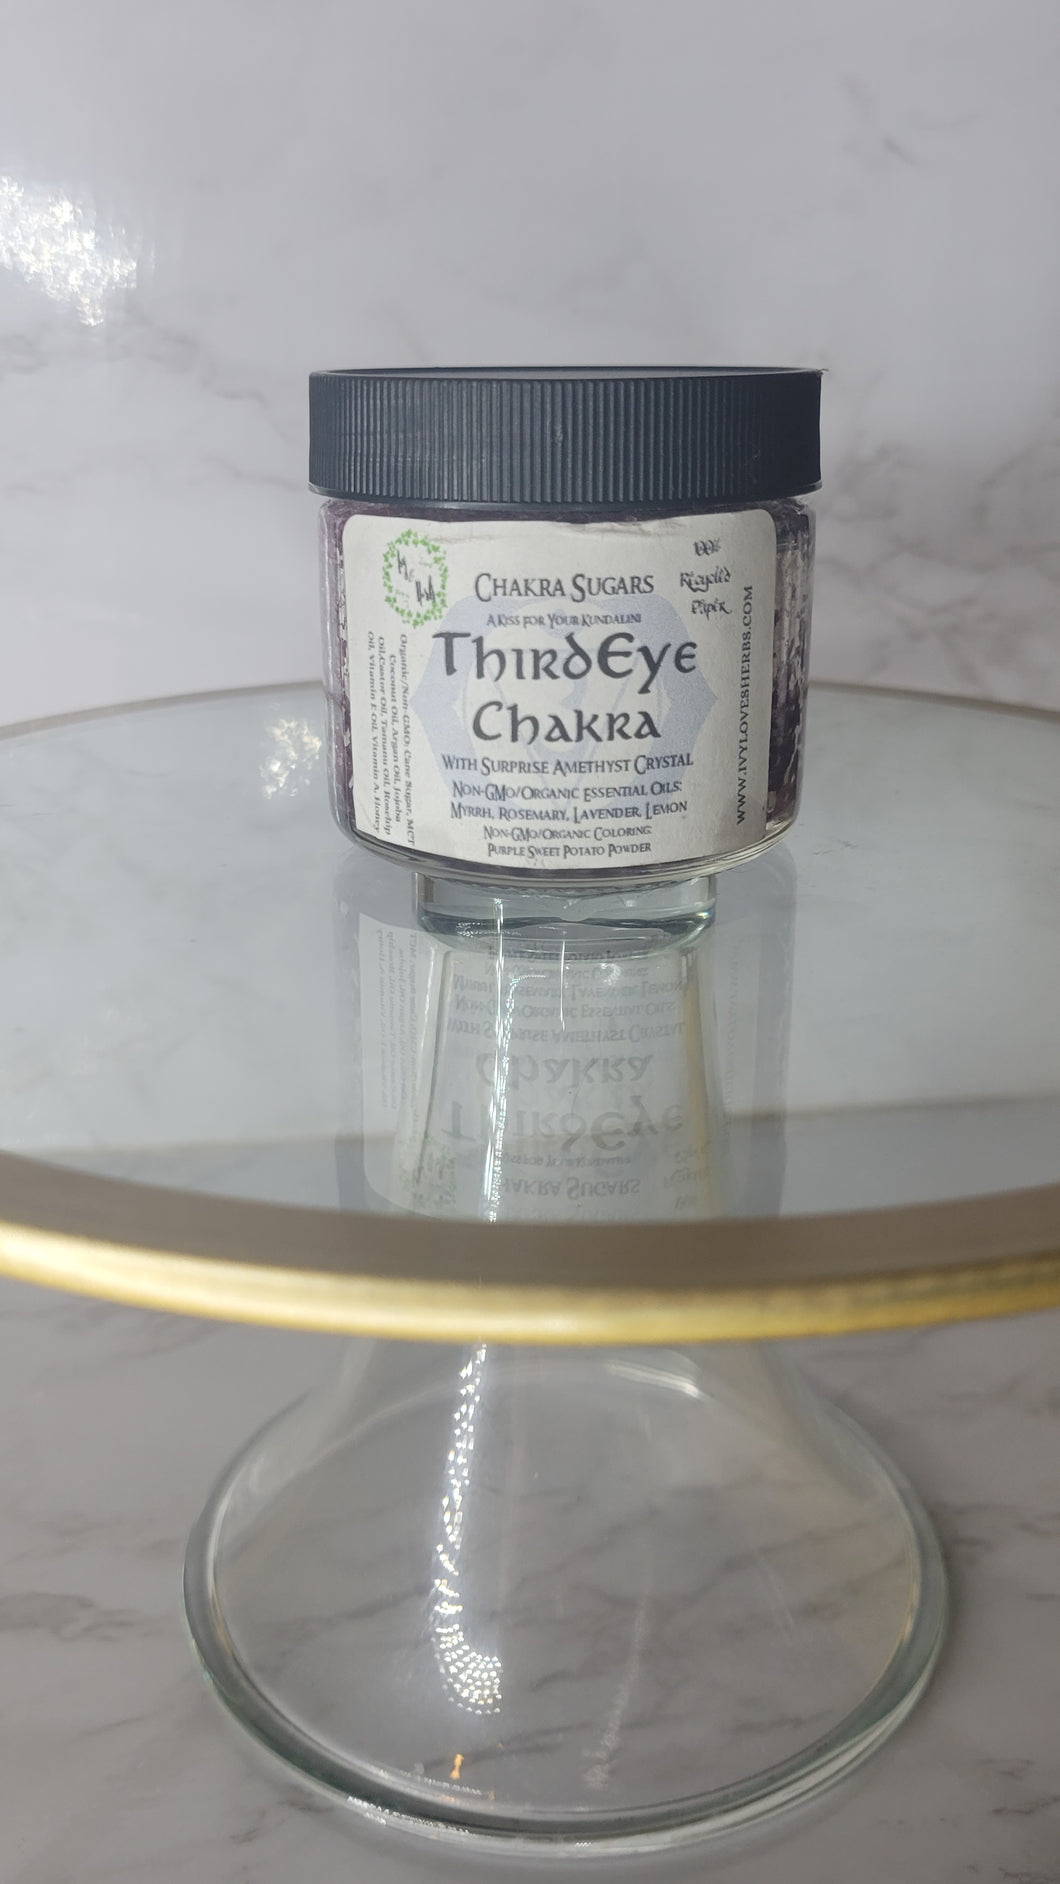 Chakra Sugars: Third Eye Chakra